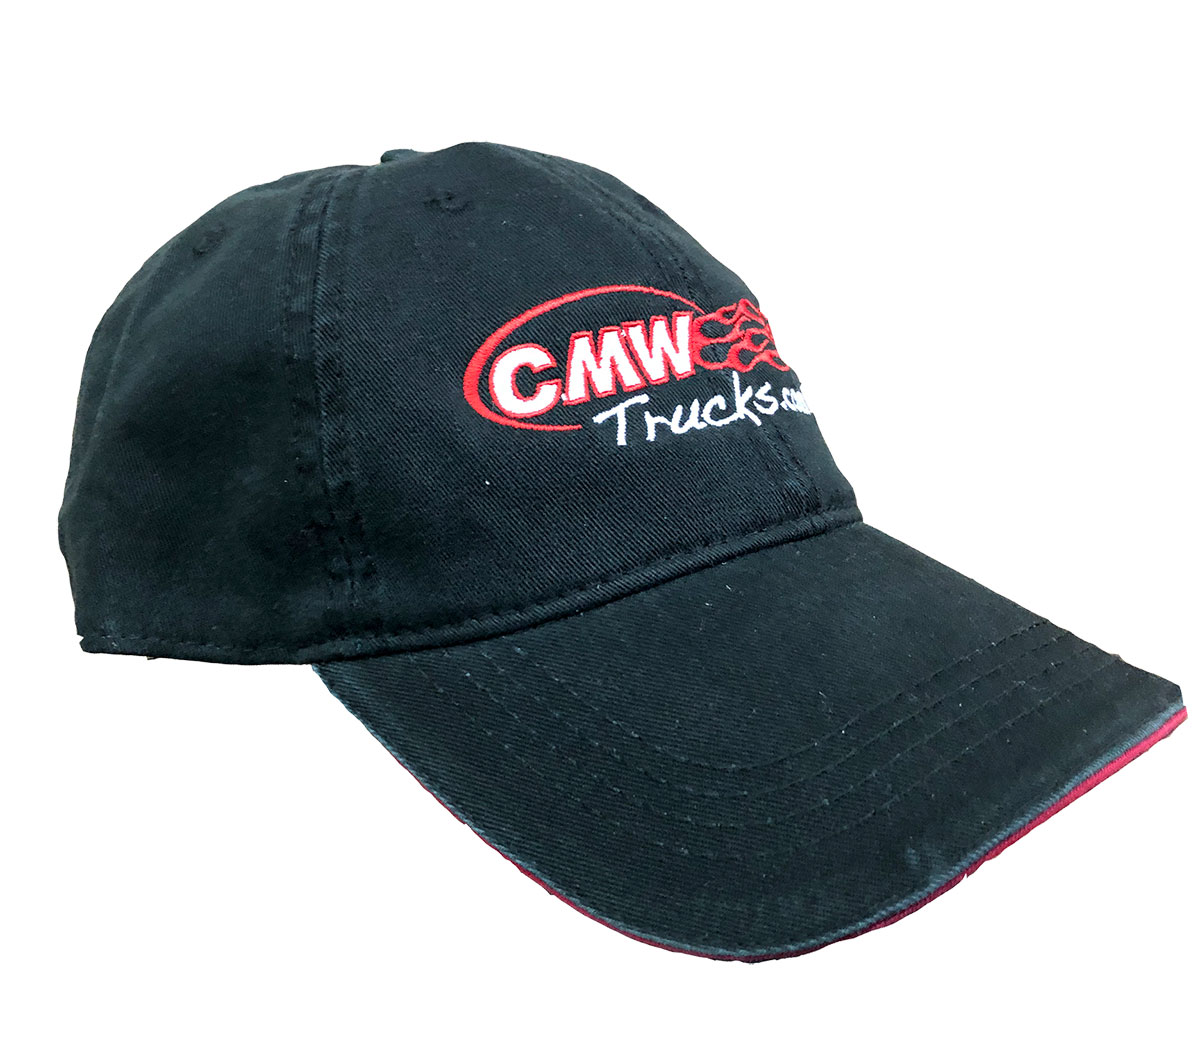 CMW Trucks Baseball Hat - Black with Red Trim - 2 color imprint